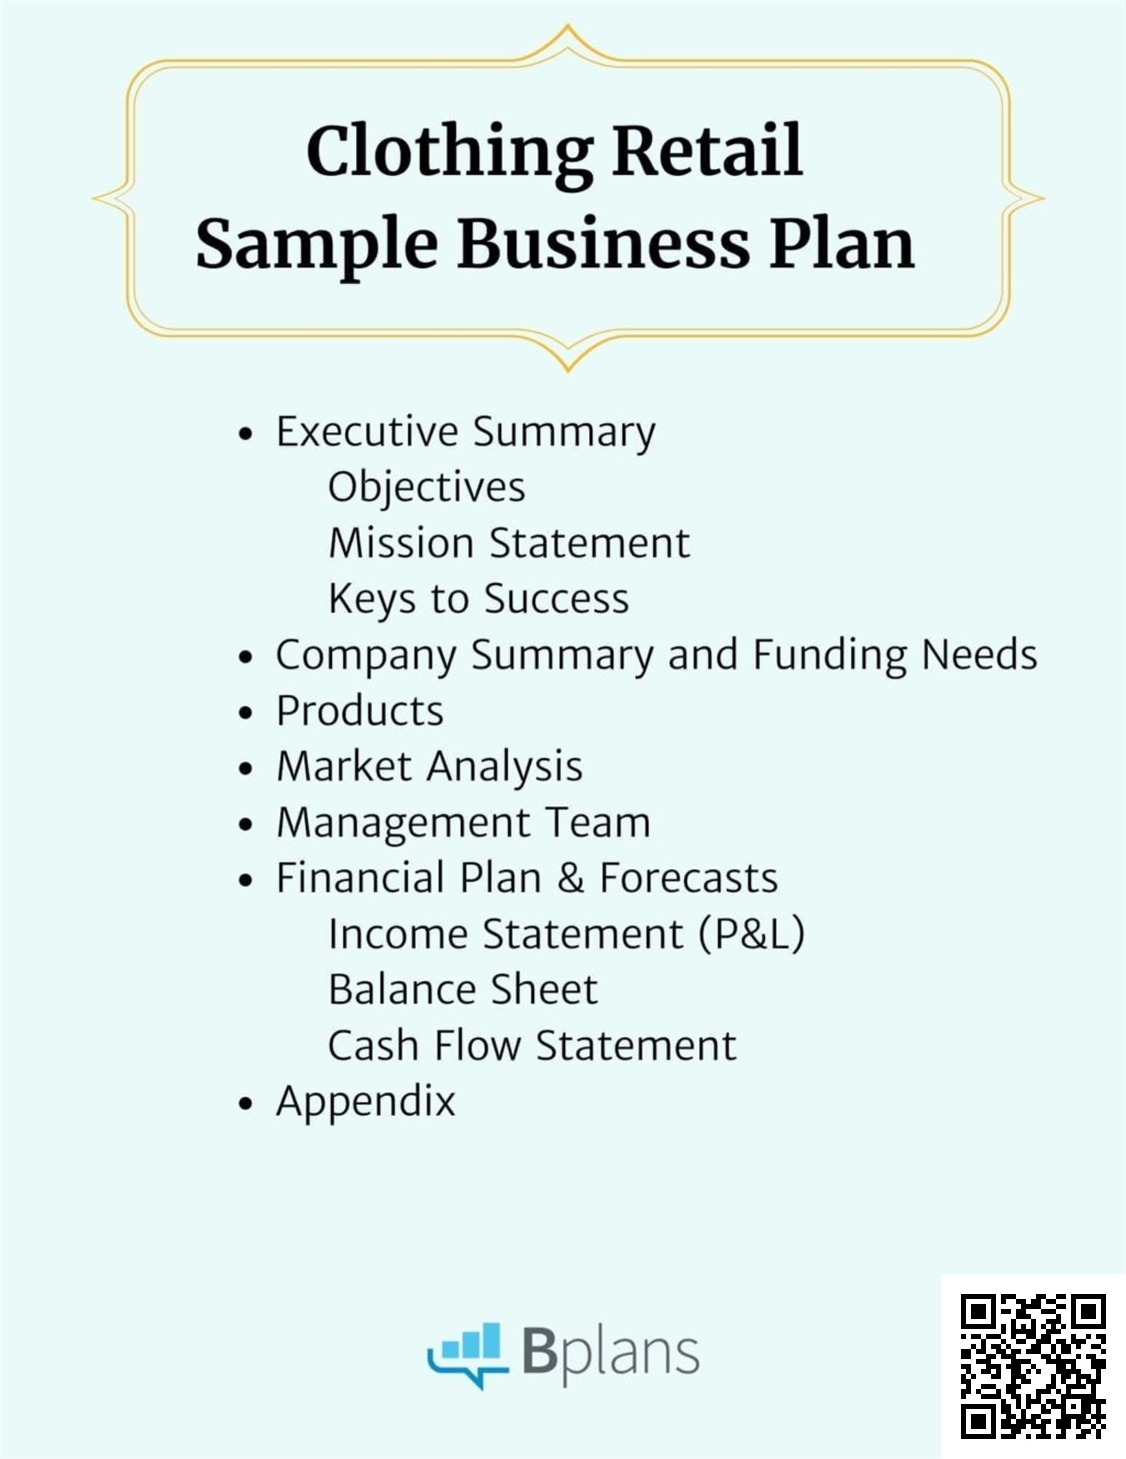 Business Plan Elements